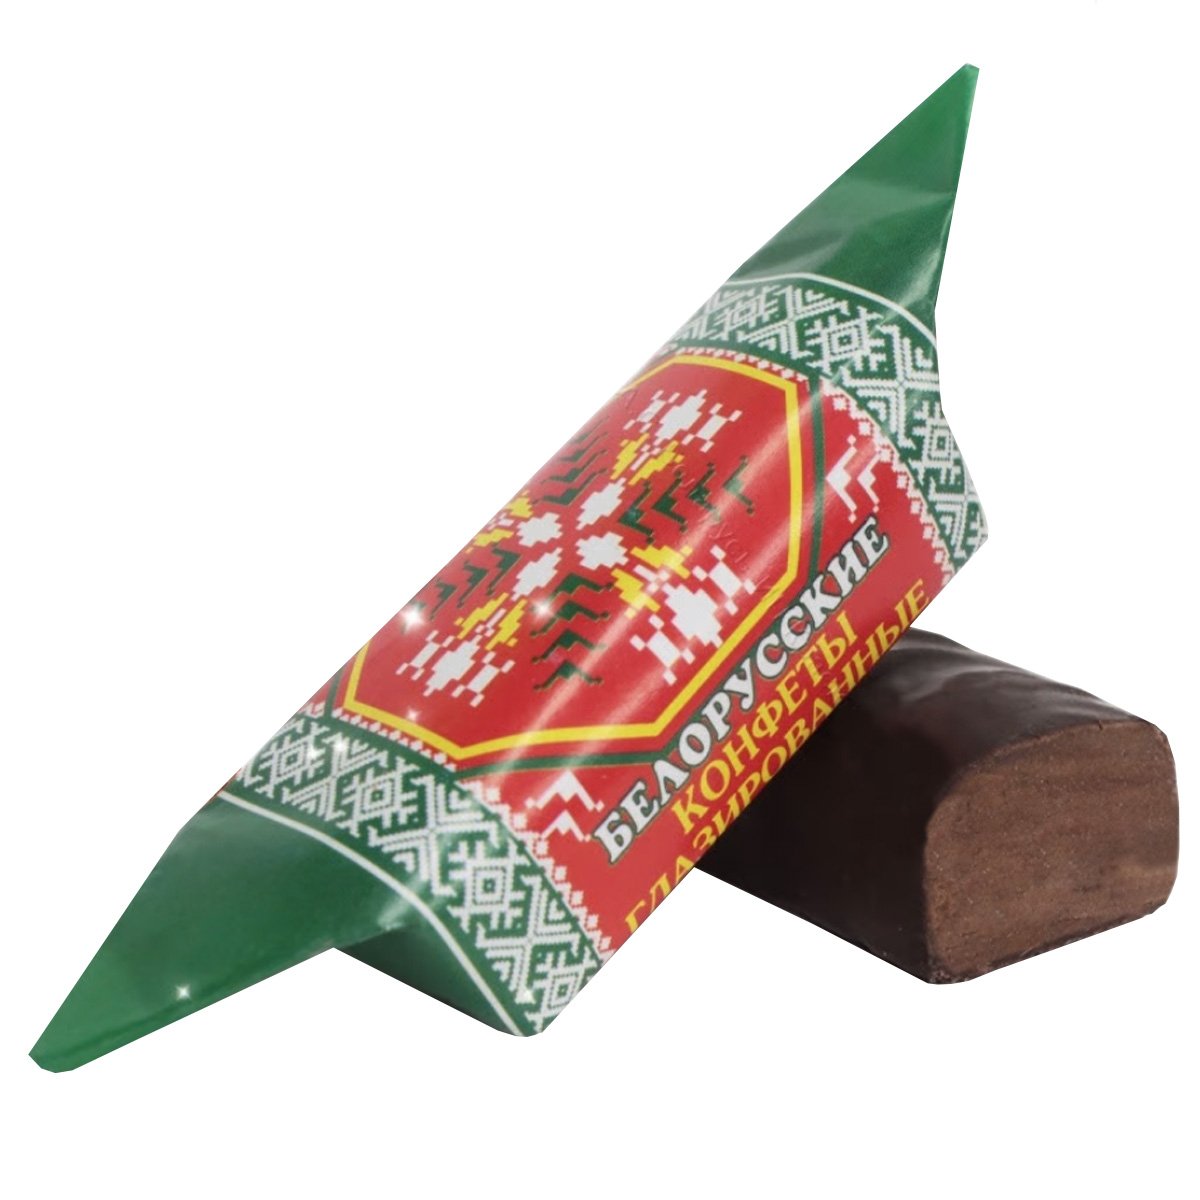 Chocolate Praline Candy, Belarusian, Kommunarka, 226g/ 0.5 lb